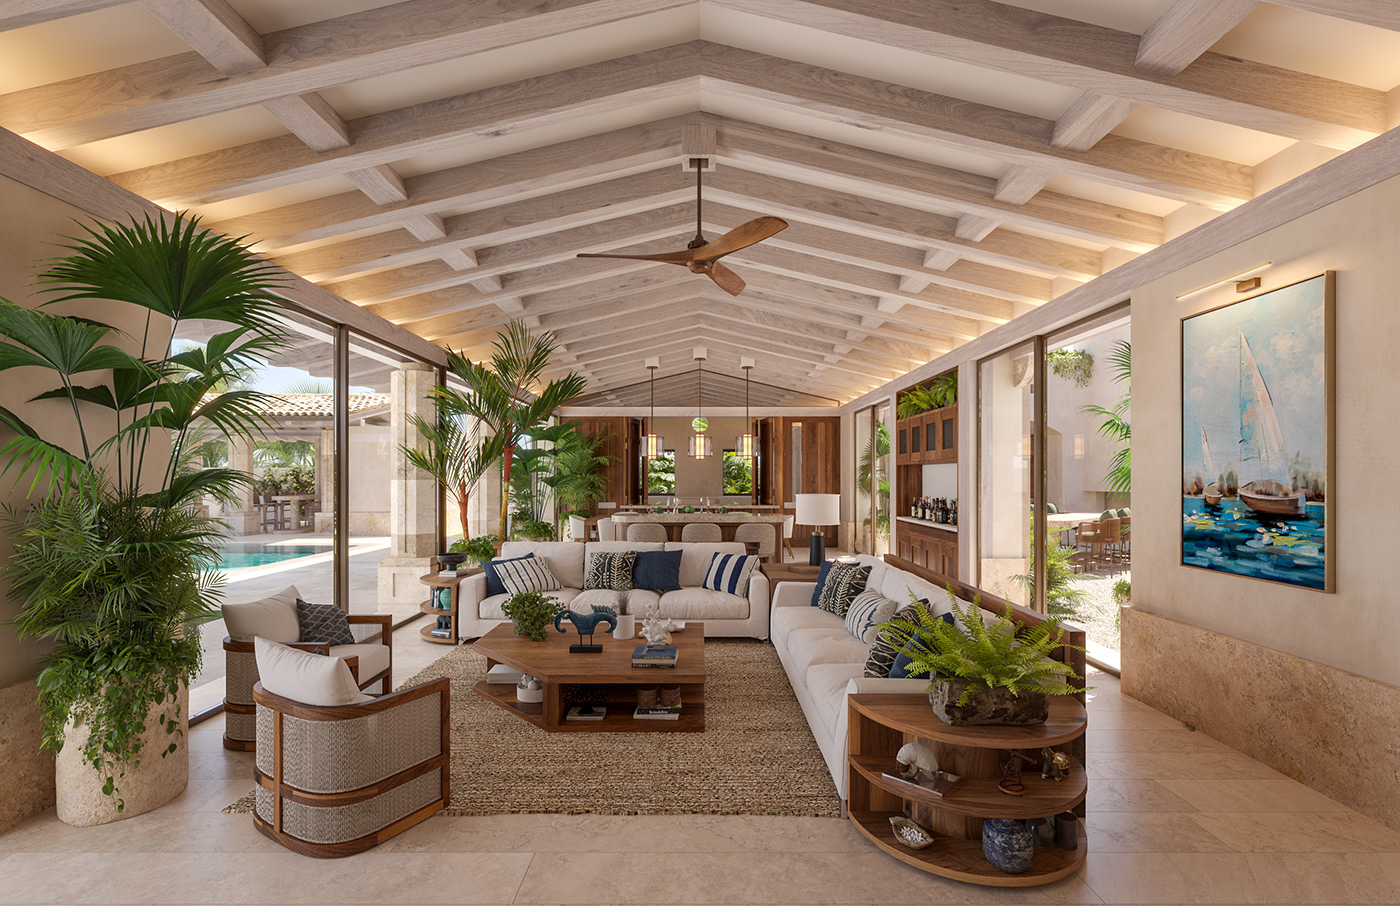 Outdoor rendering visualization 3D vray archviz architecture living room patio design garden